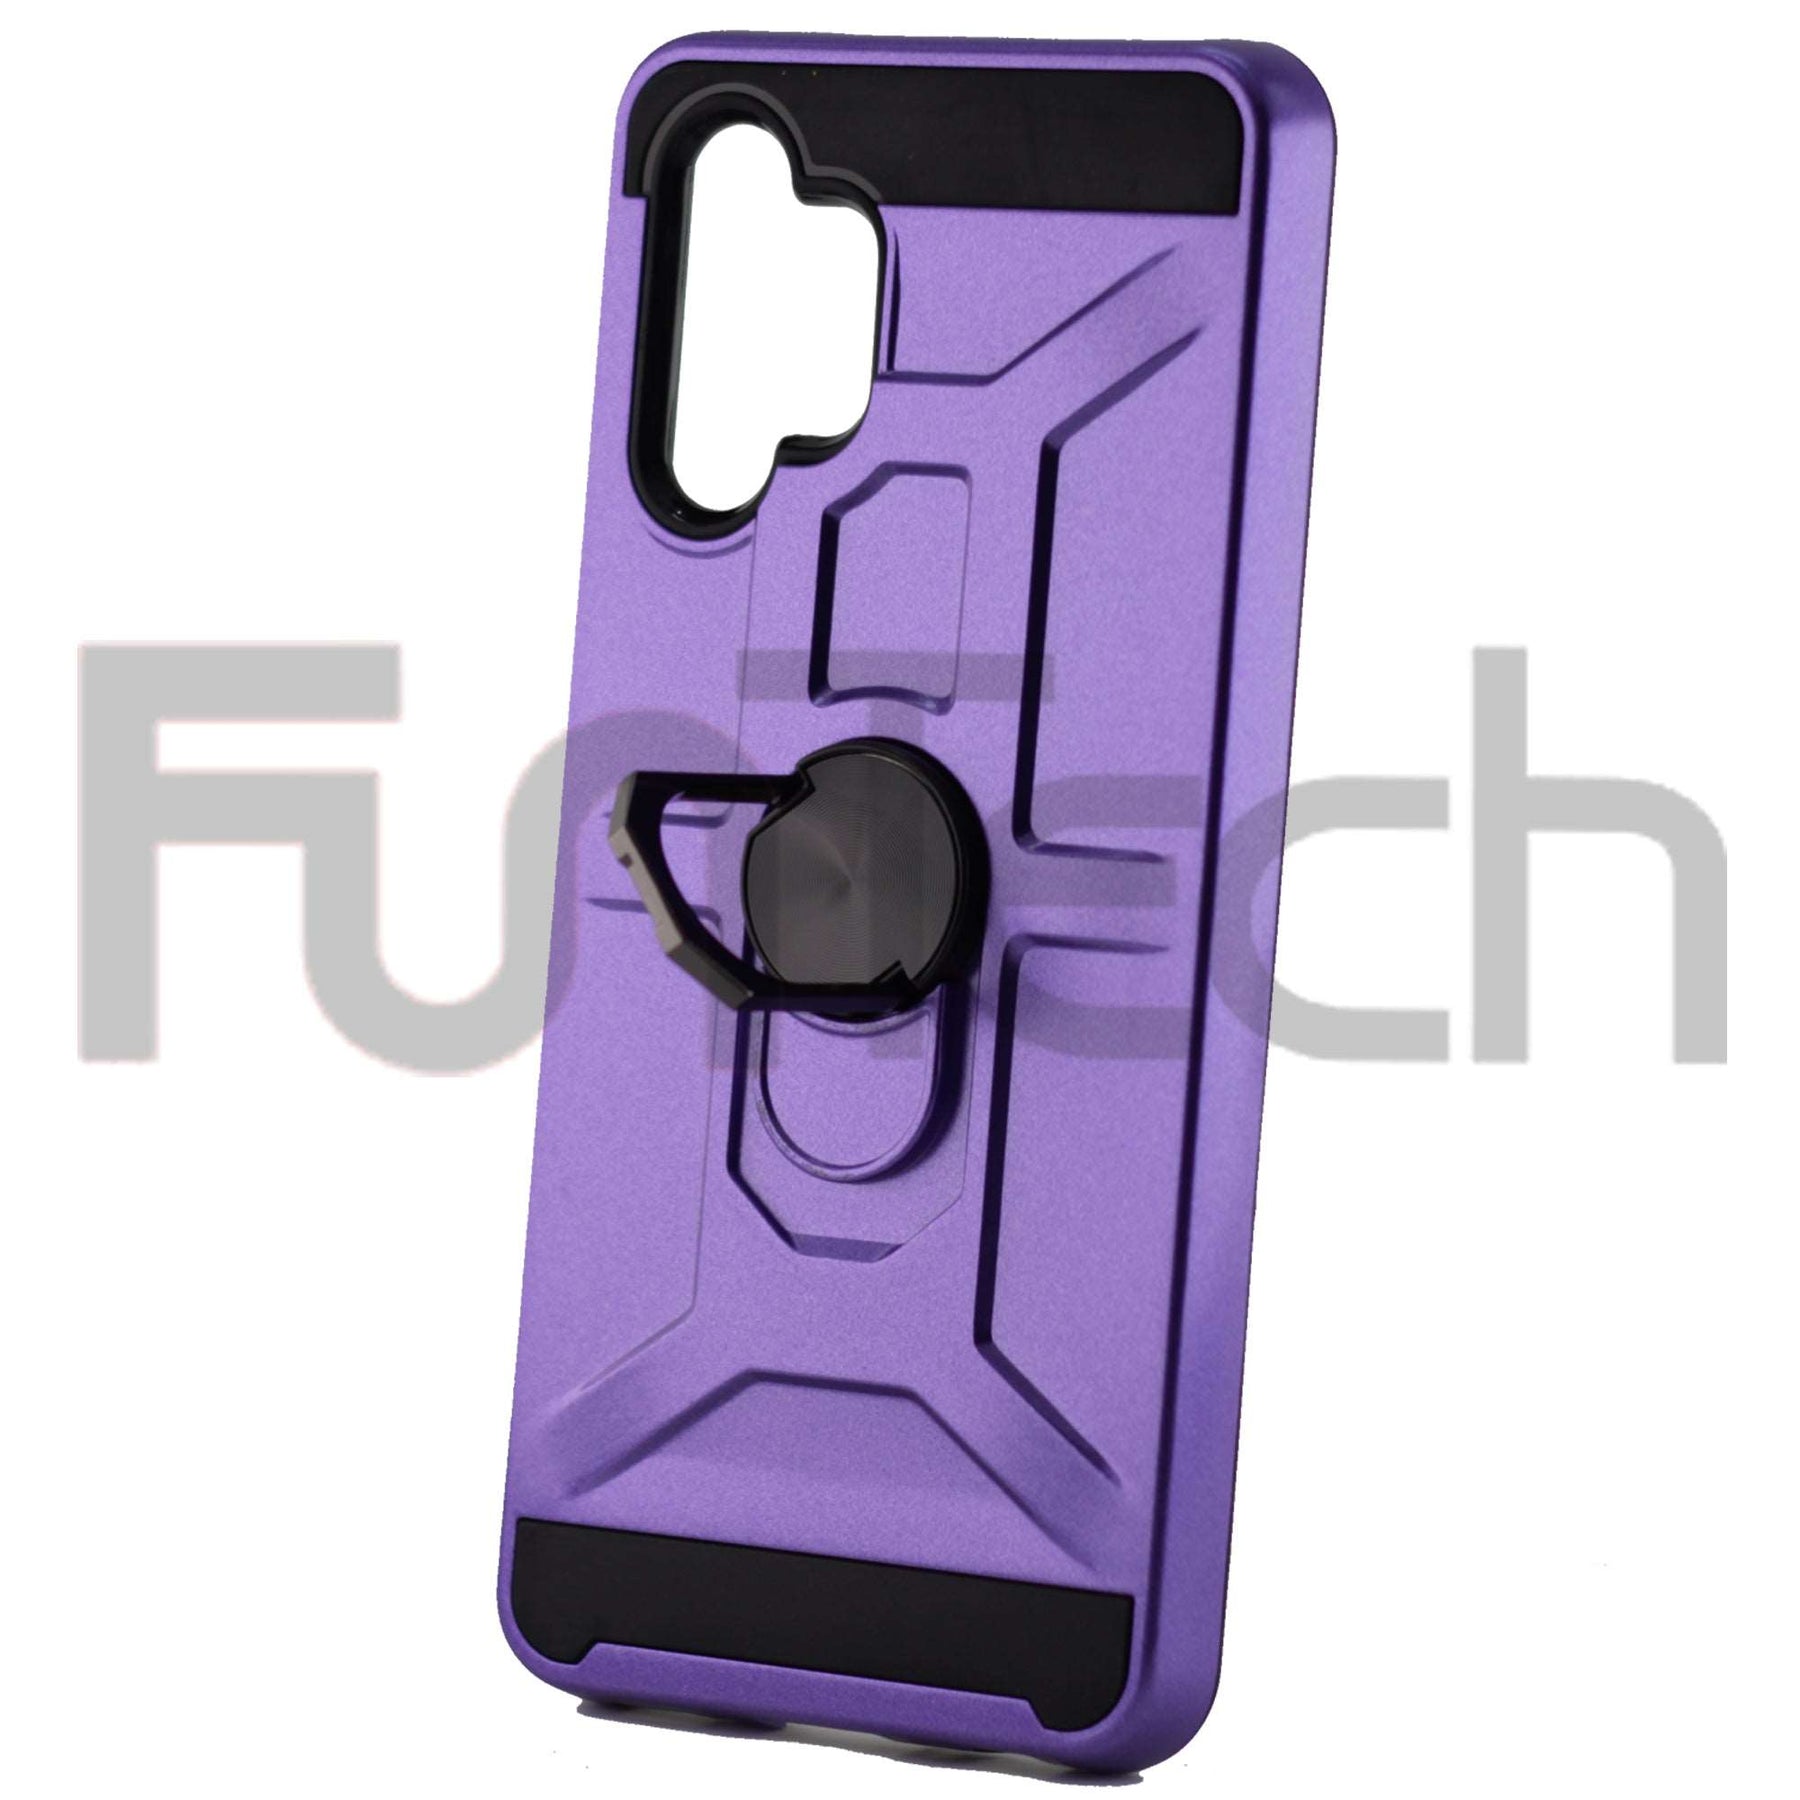 Samsung Case, Color purple.